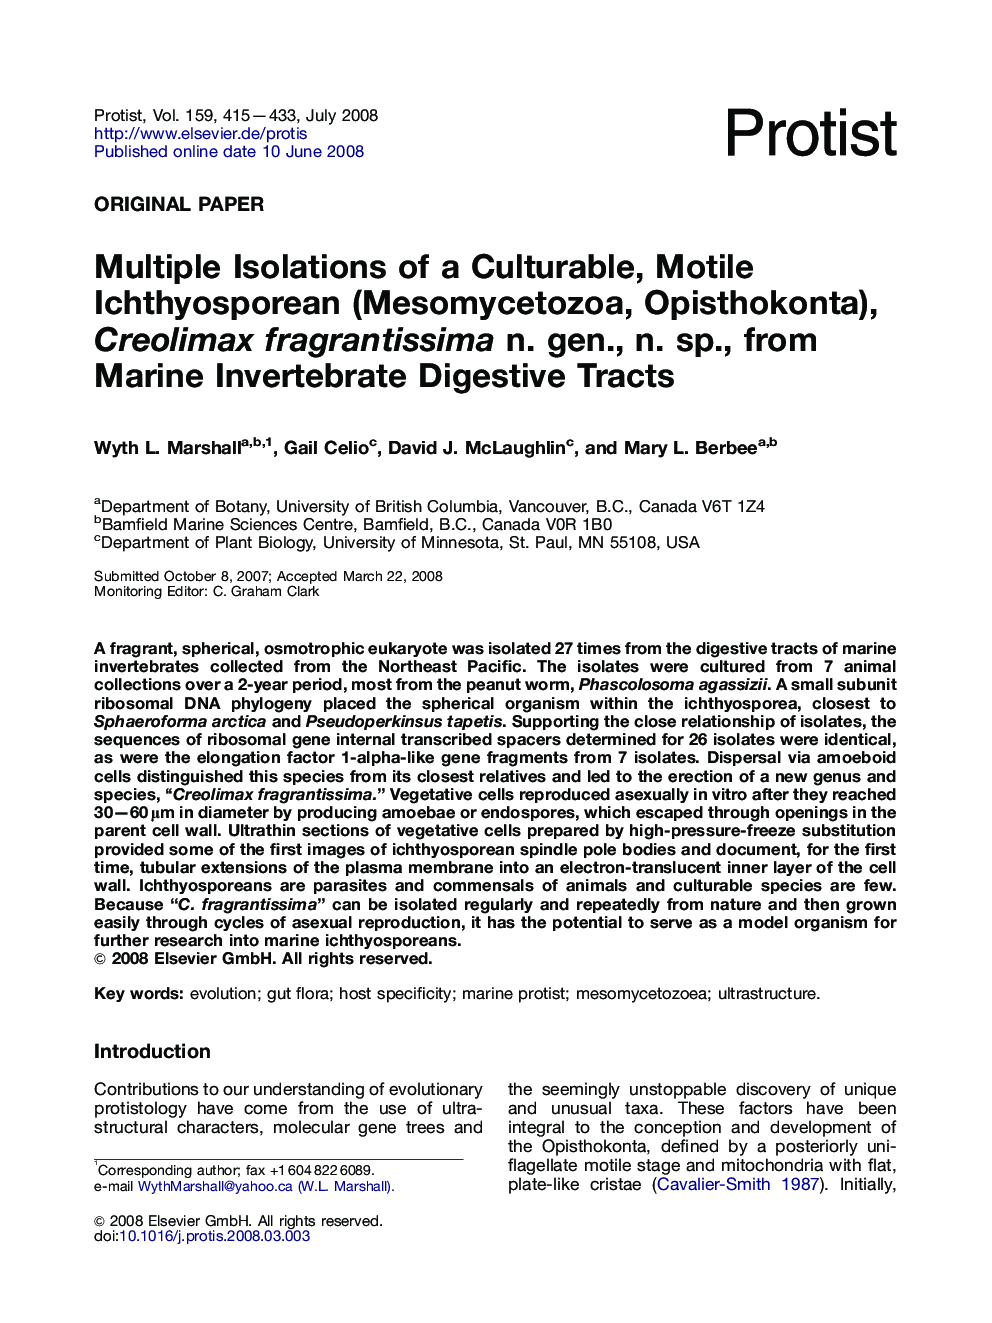 Multiple Isolations of a Culturable, Motile Ichthyosporean (Mesomycetozoa, Opisthokonta), Creolimax fragrantissima n. gen., n. sp., from Marine Invertebrate Digestive Tracts